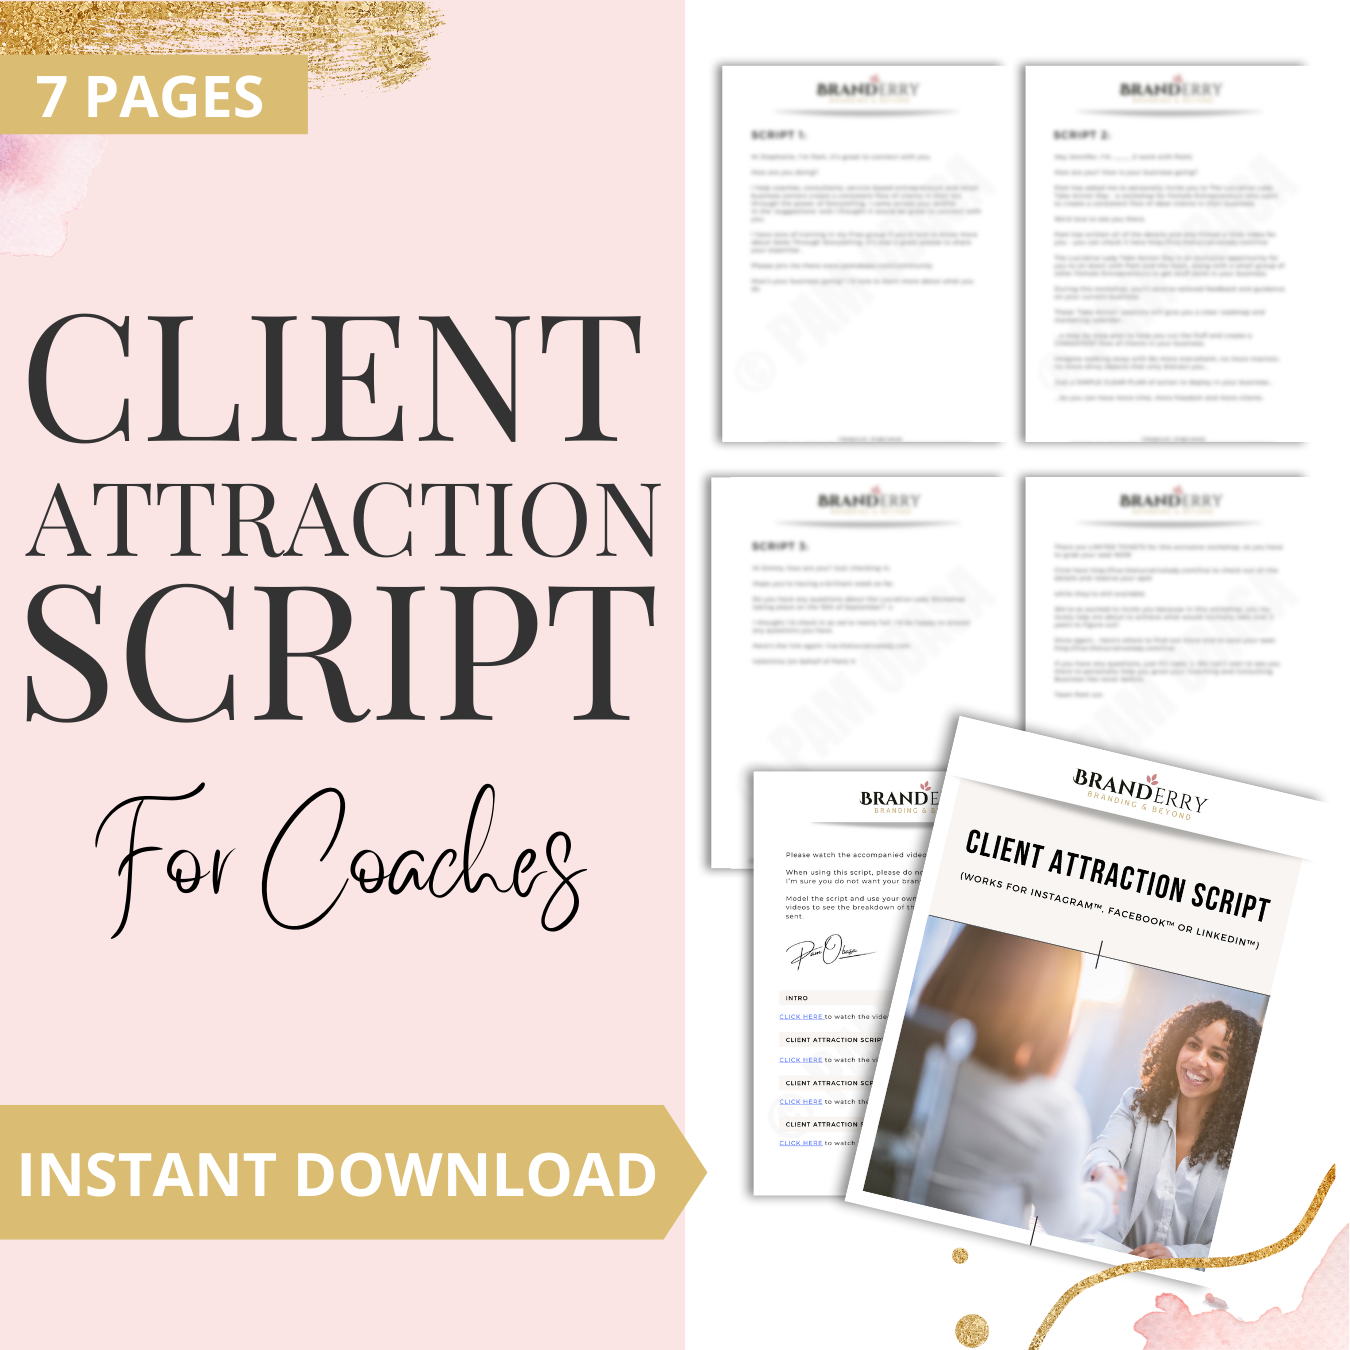 Client Attraction Script For Coaches